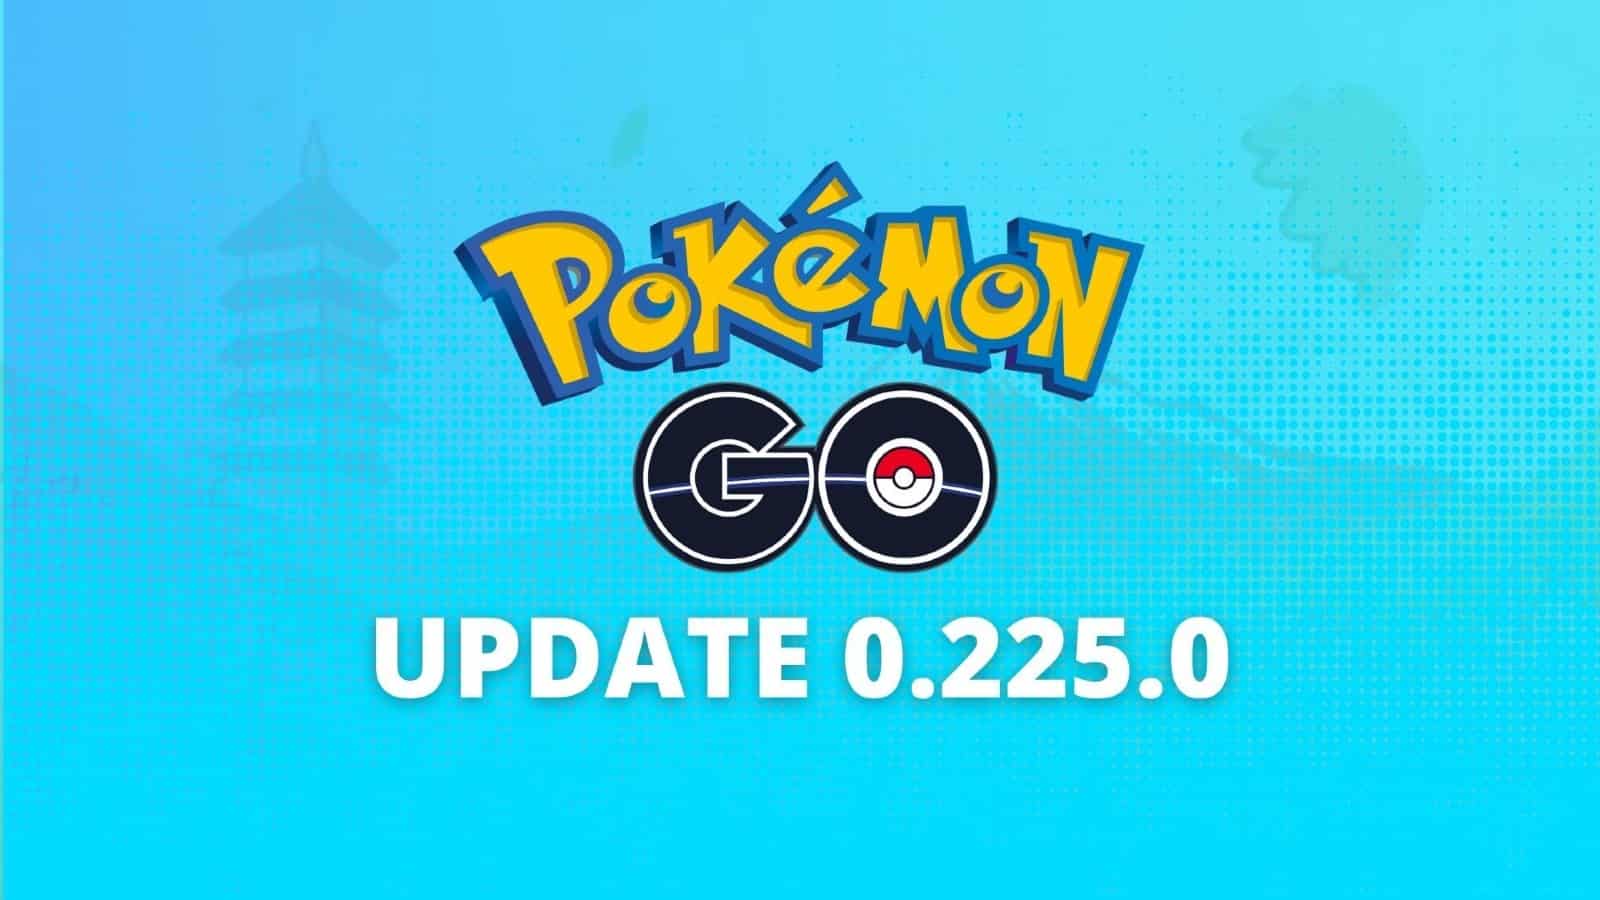 Title screen for Pokemon Go's update 0.225.0